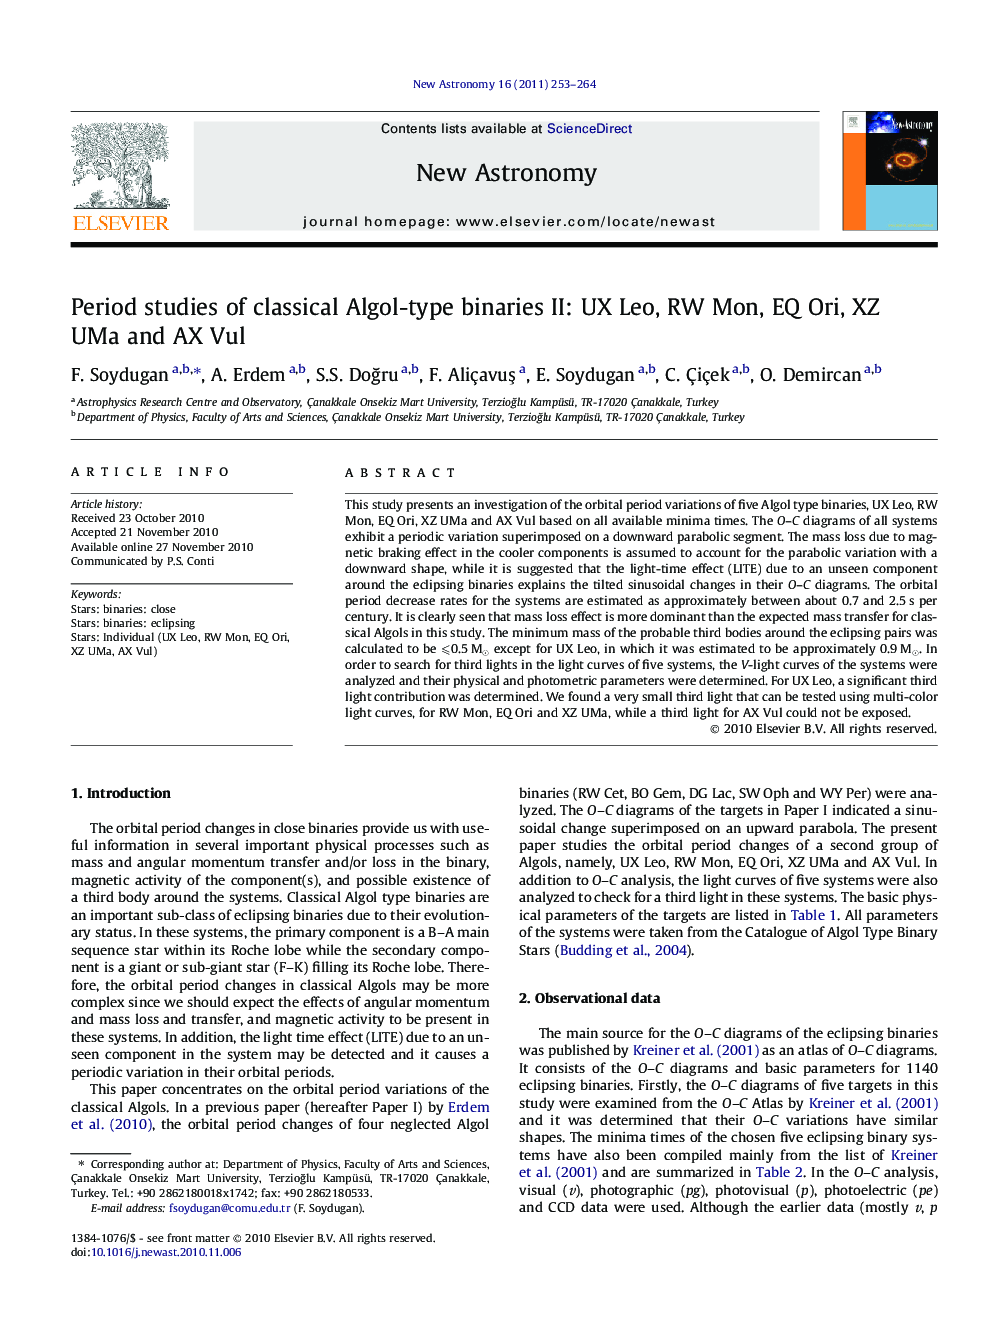 Period studies of classical Algol-type binaries II: UX Leo, RW Mon, EQ Ori, XZ UMa and AX Vul